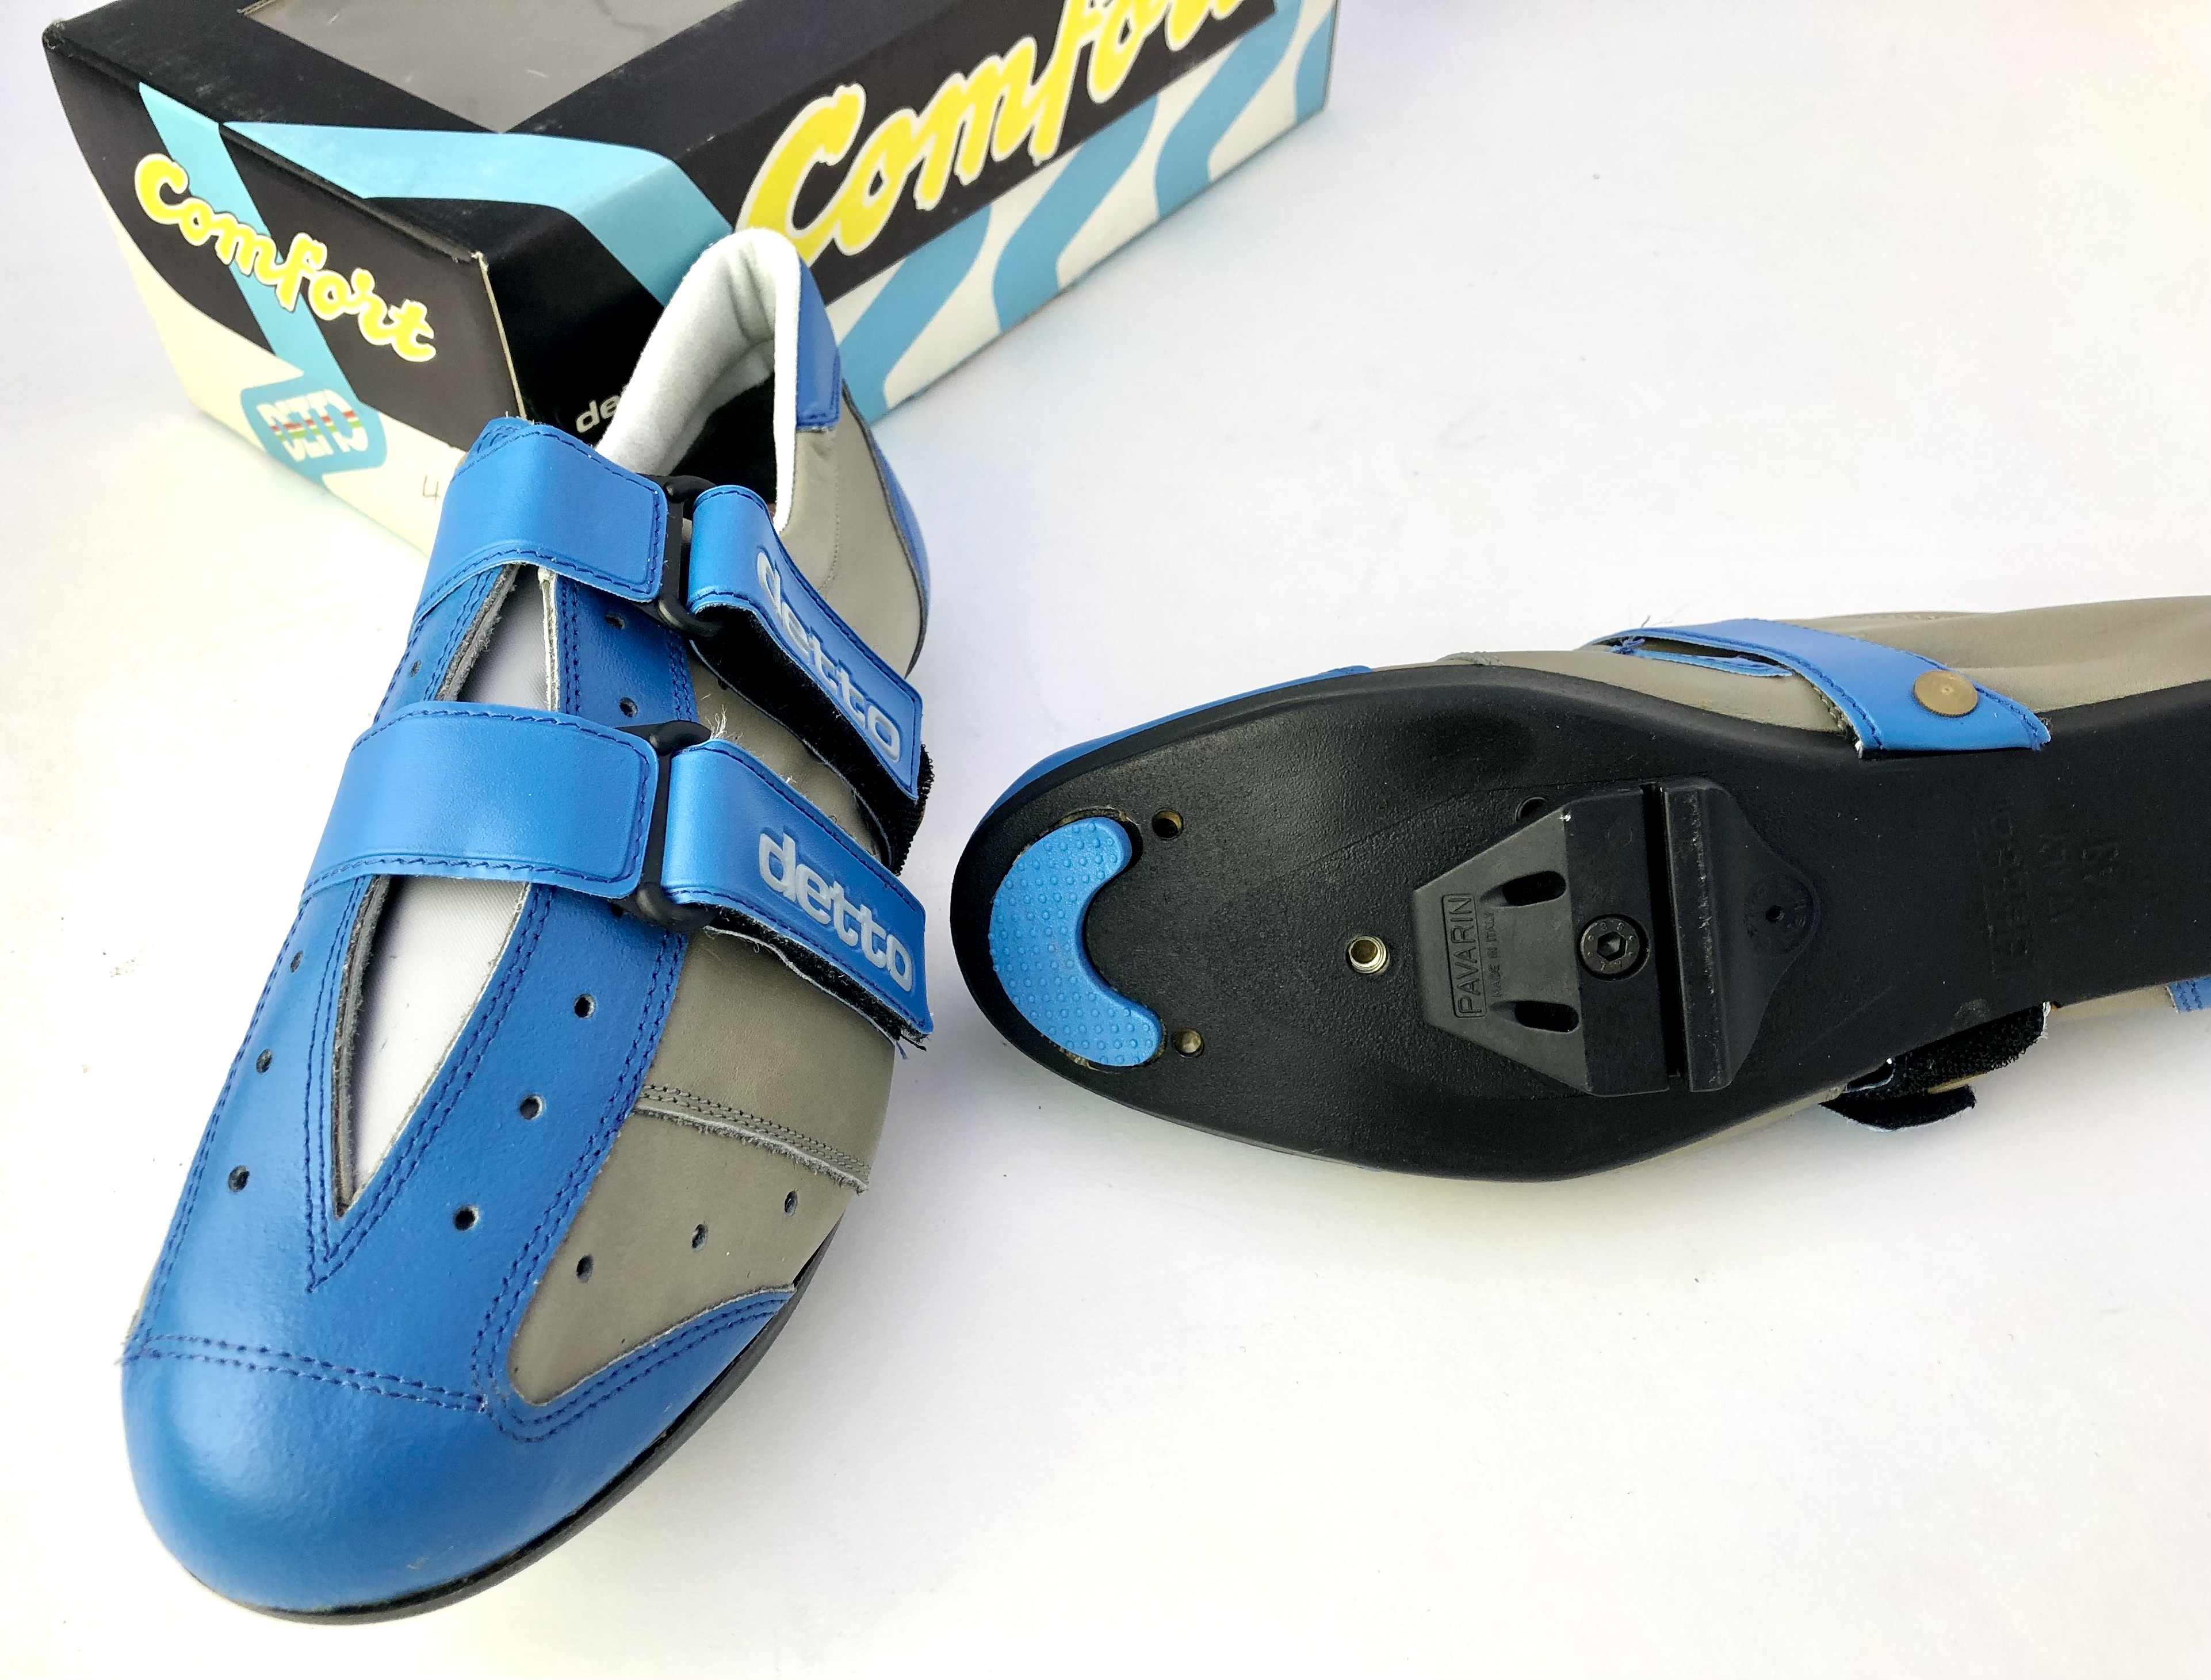 NOS Vintage Detto Pietro Mod. 230 Comfort azul Cycling Shoes Size 41